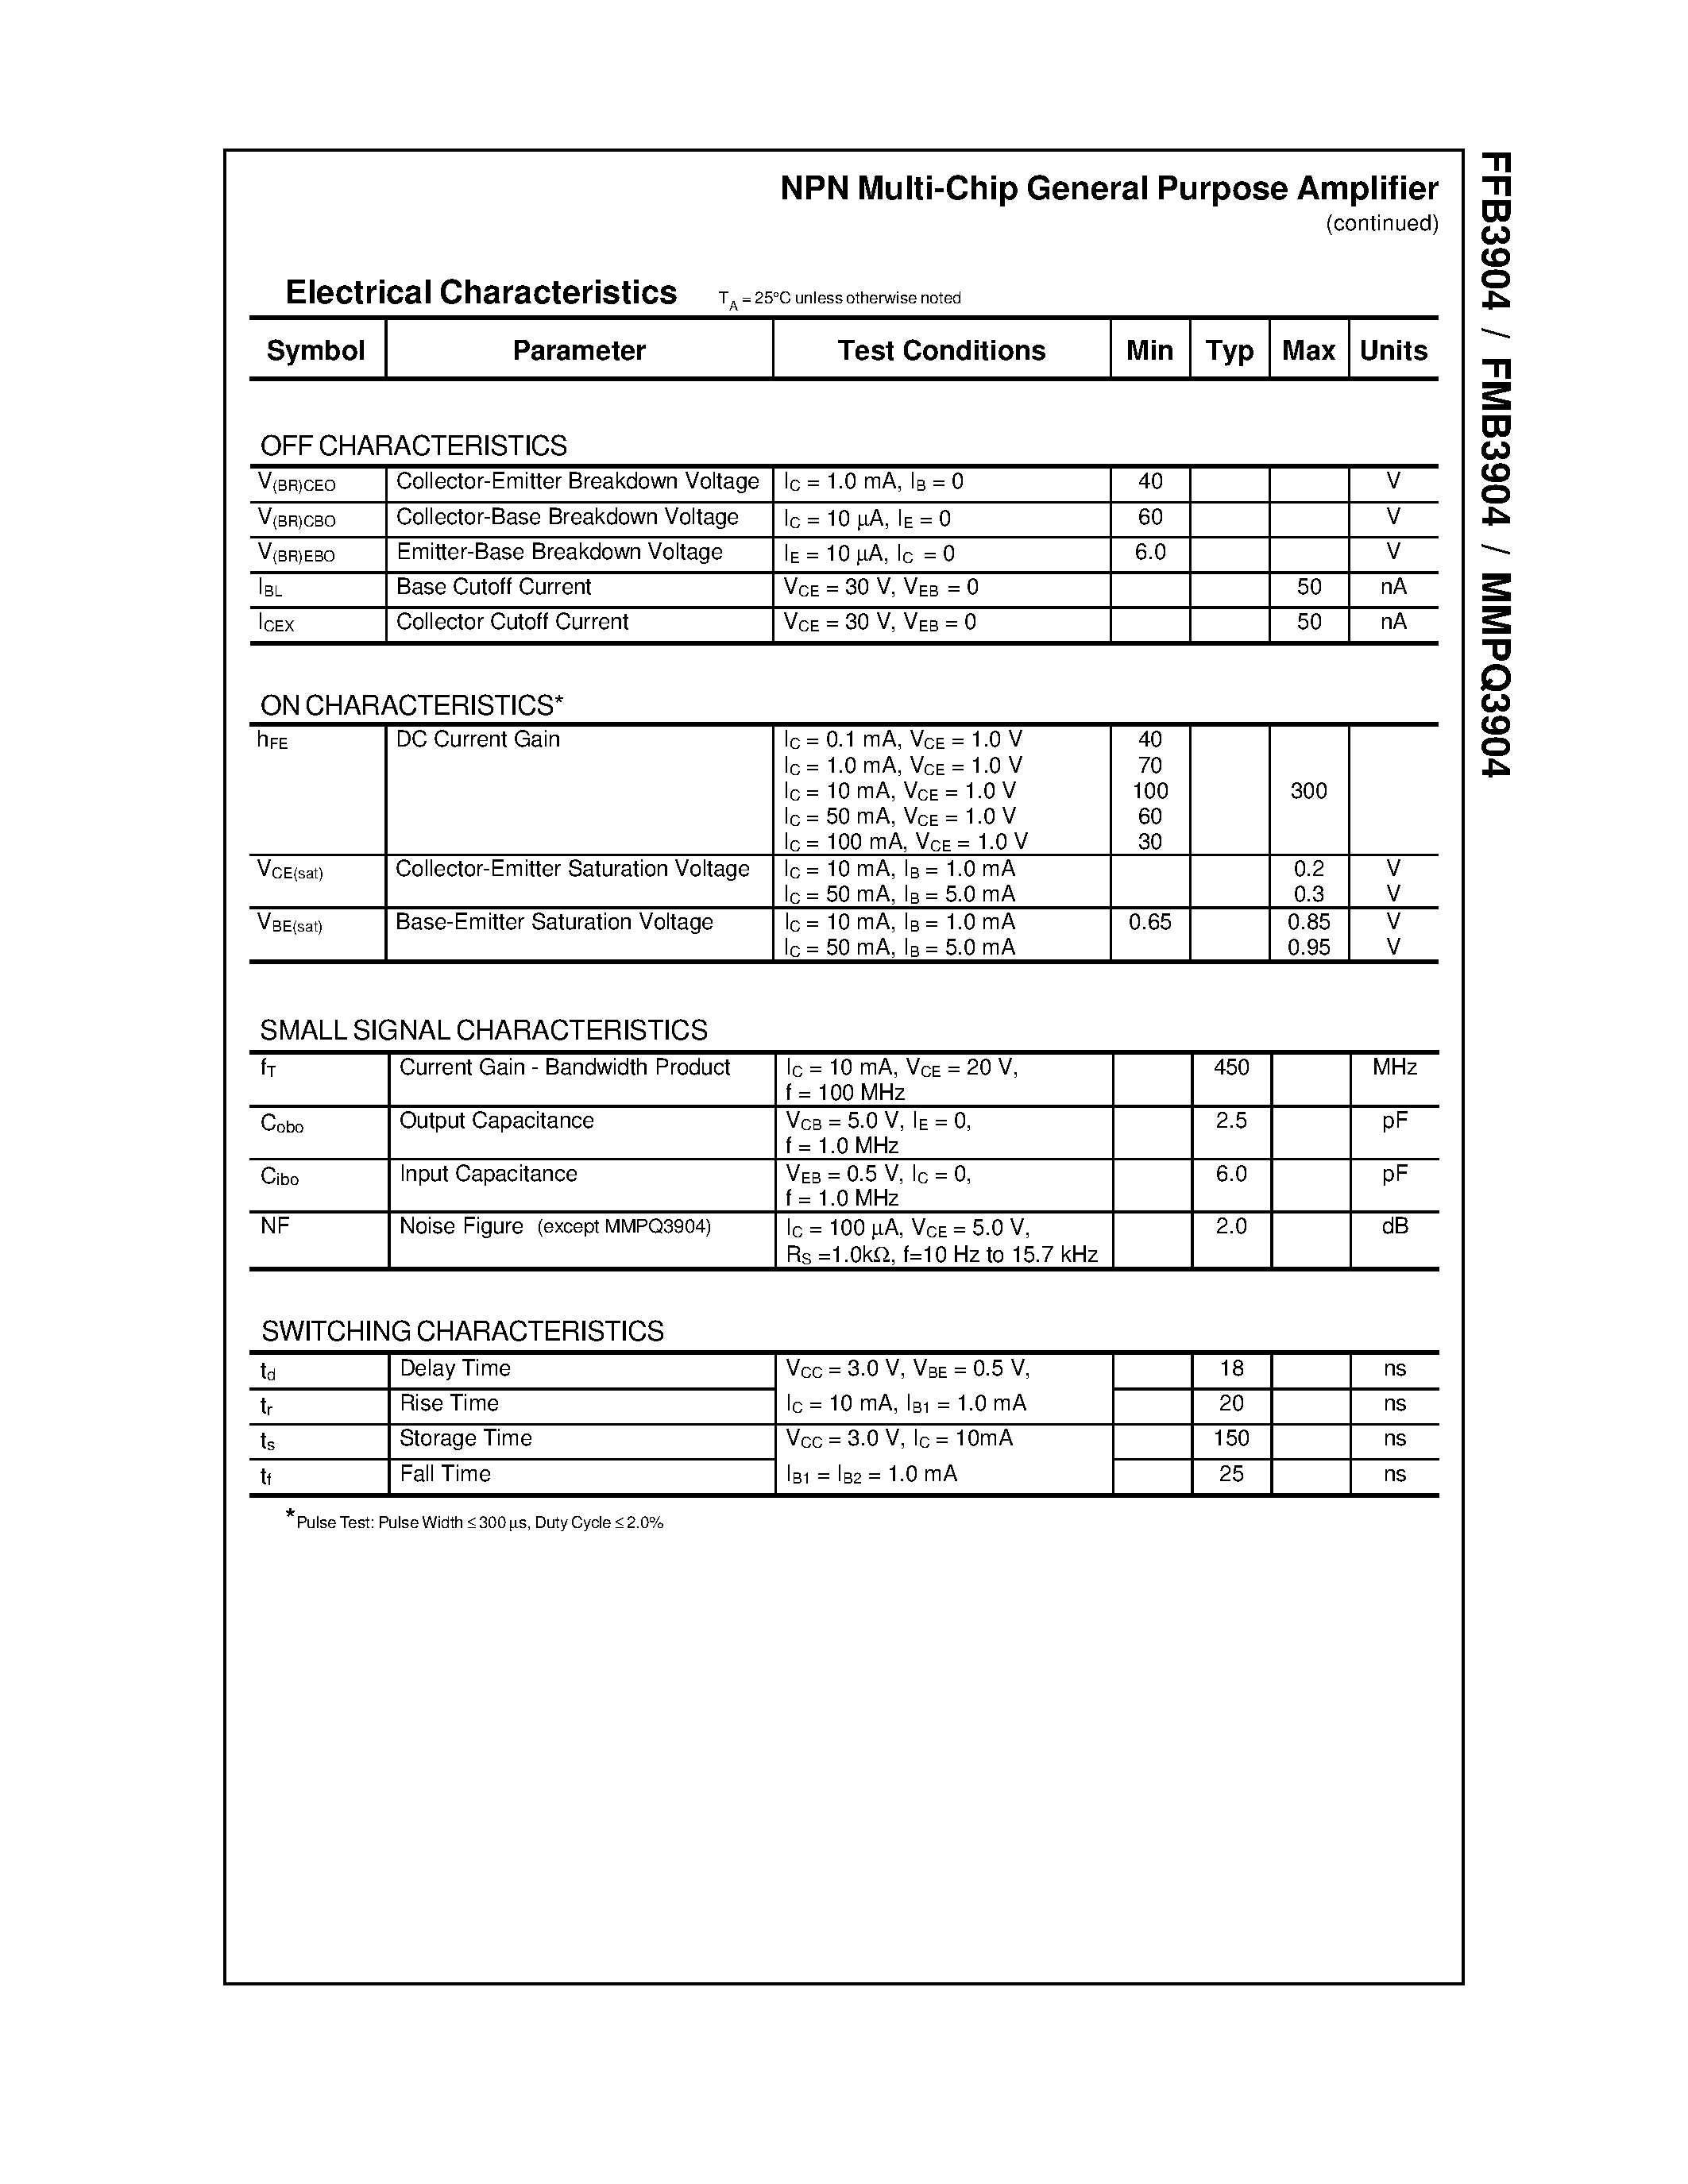 Datasheet FMB3904 - NPN General Purpose Amplifier page 2